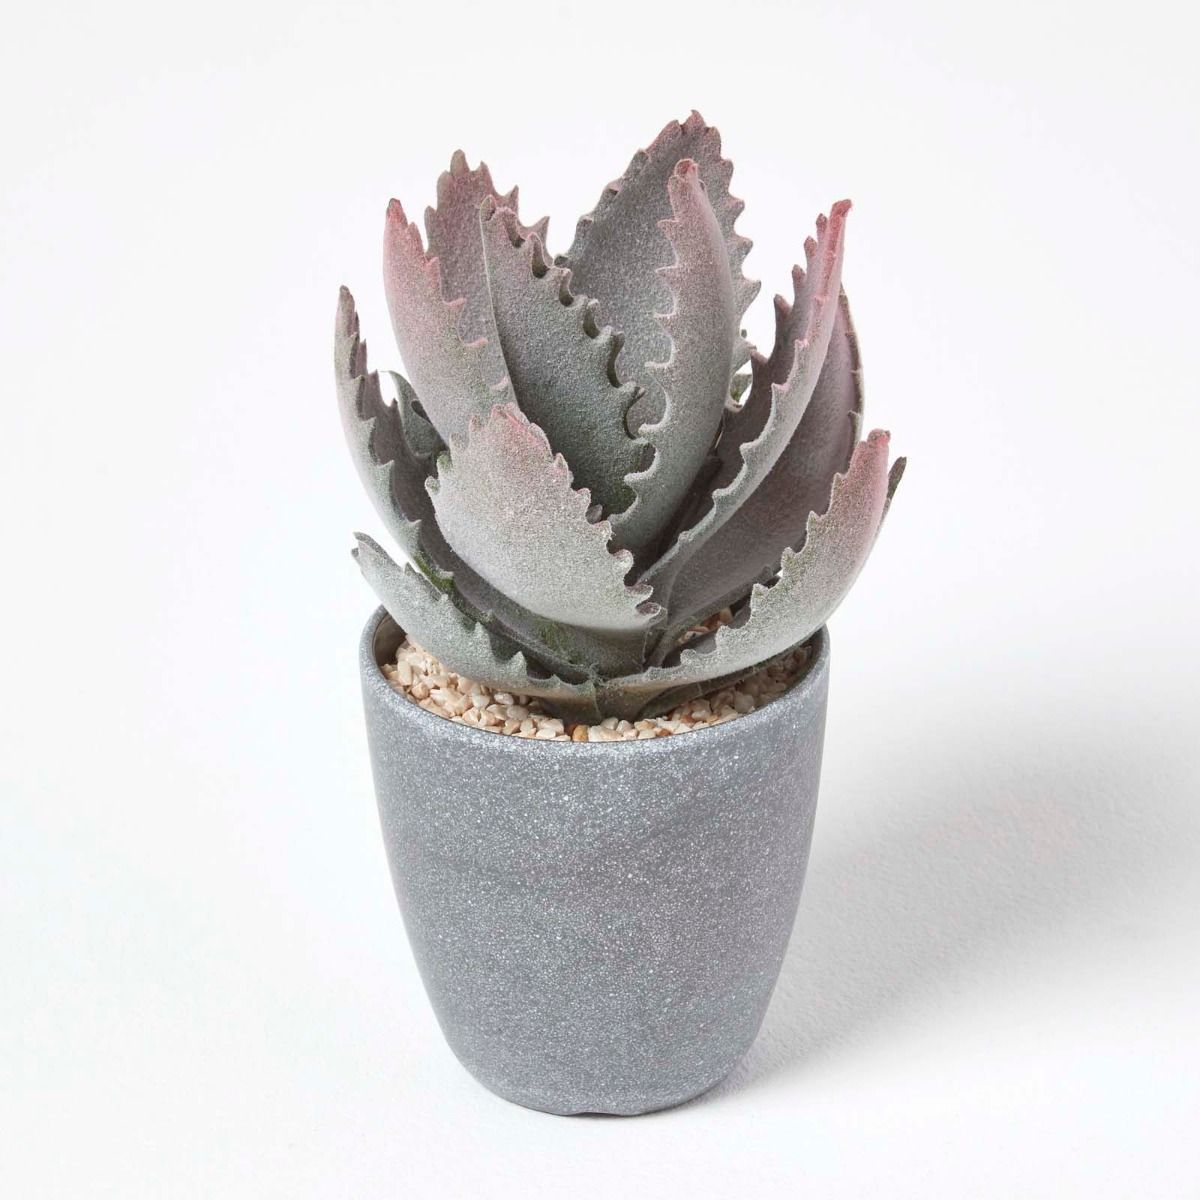 HOMESCAPES Petit Arrangement de succulentes artificielles en Pot en Terracotta 14 cm